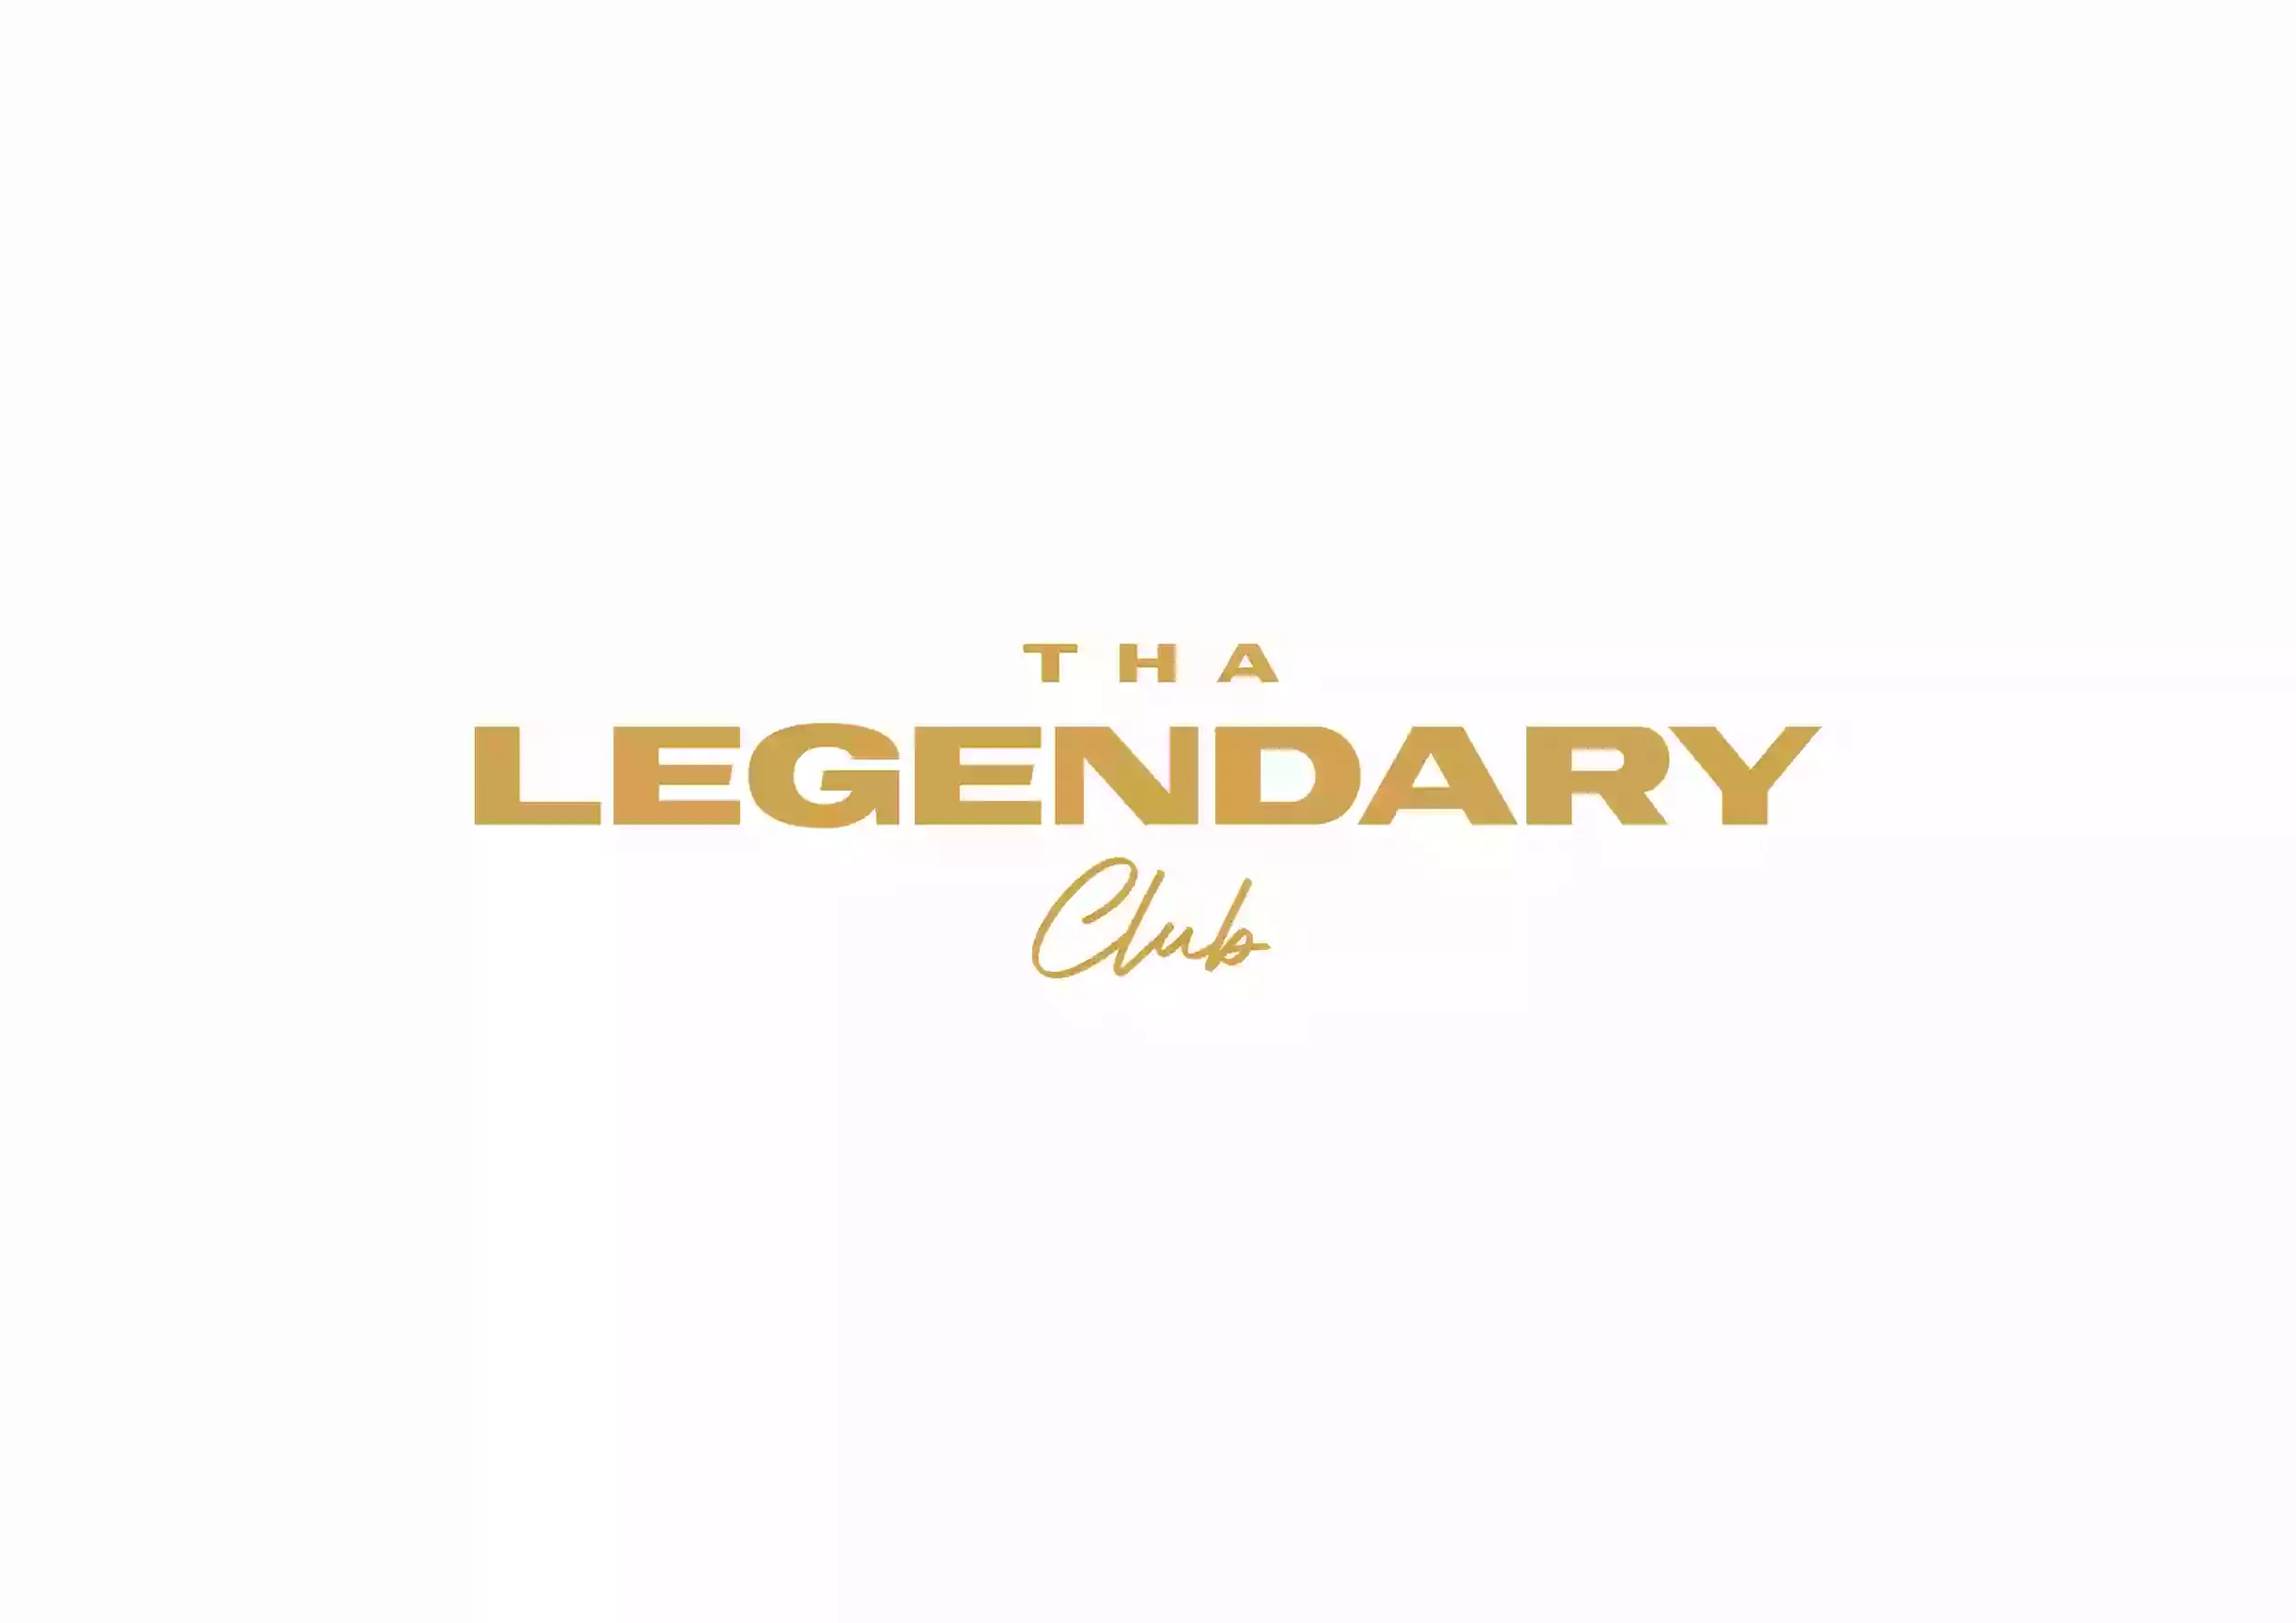 Tha Legendary Club